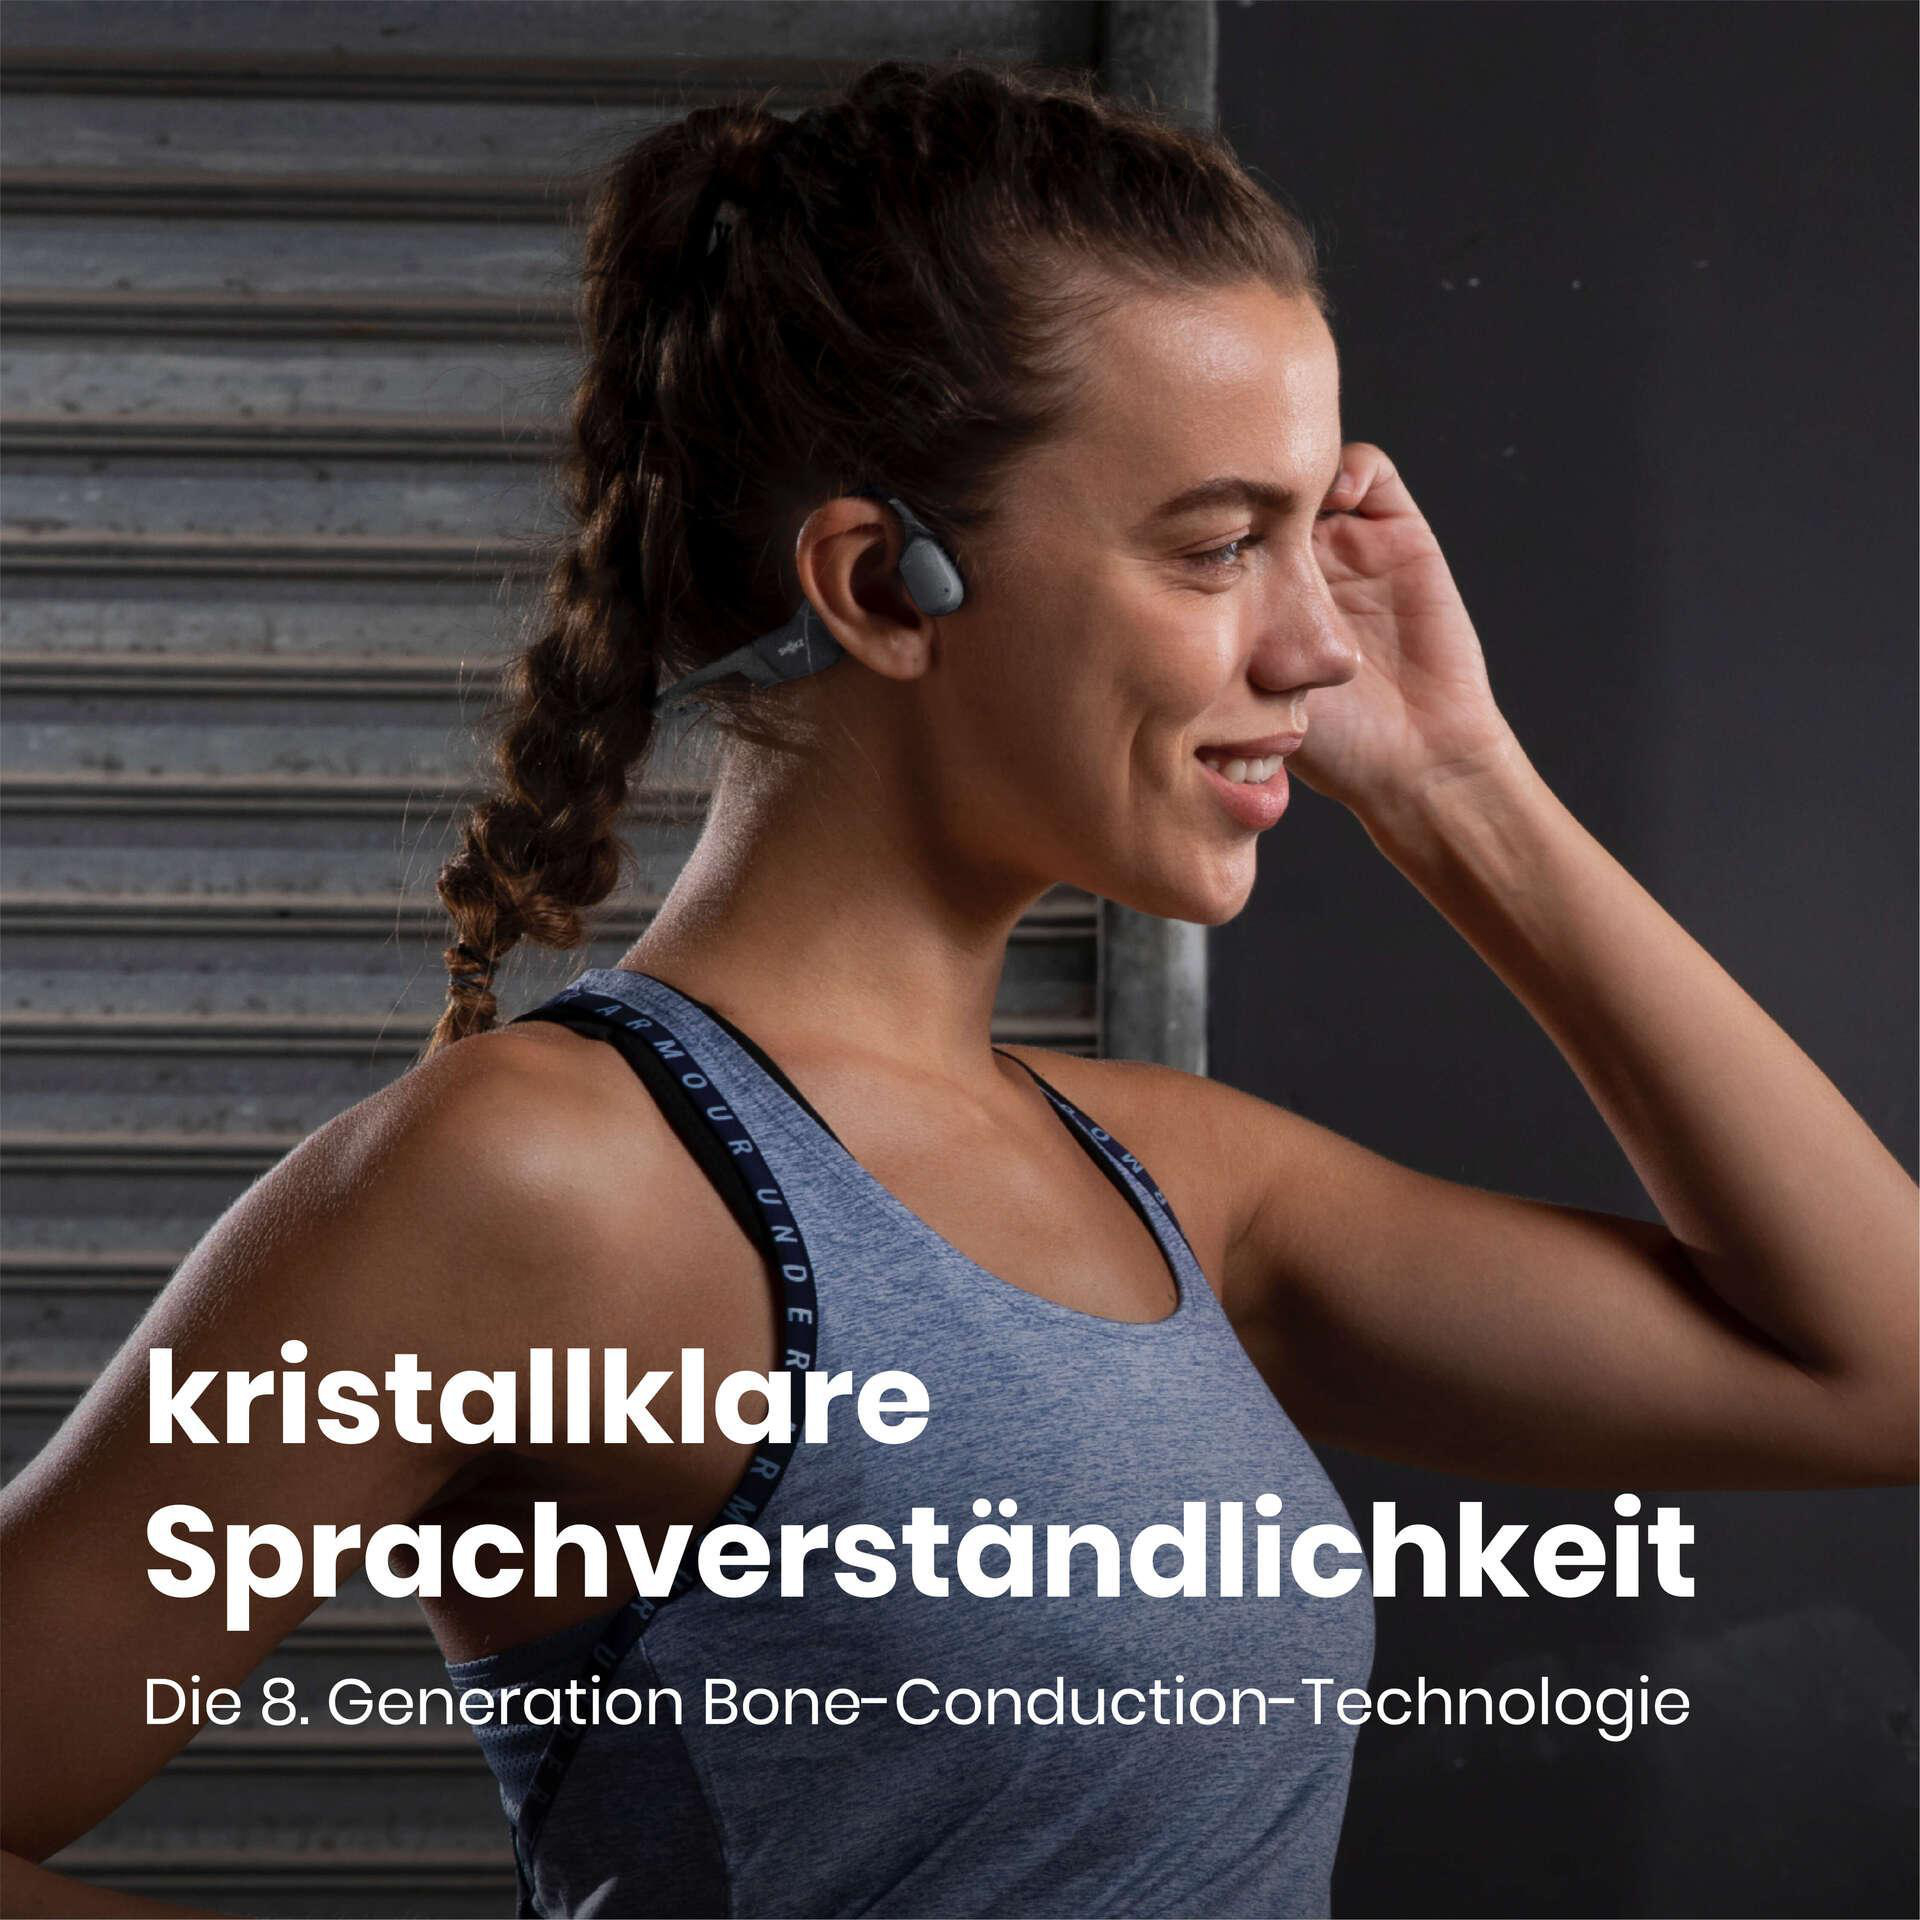 SHOKZ Open-ear Kopfhörer Bluetooth OpenRun, Grau